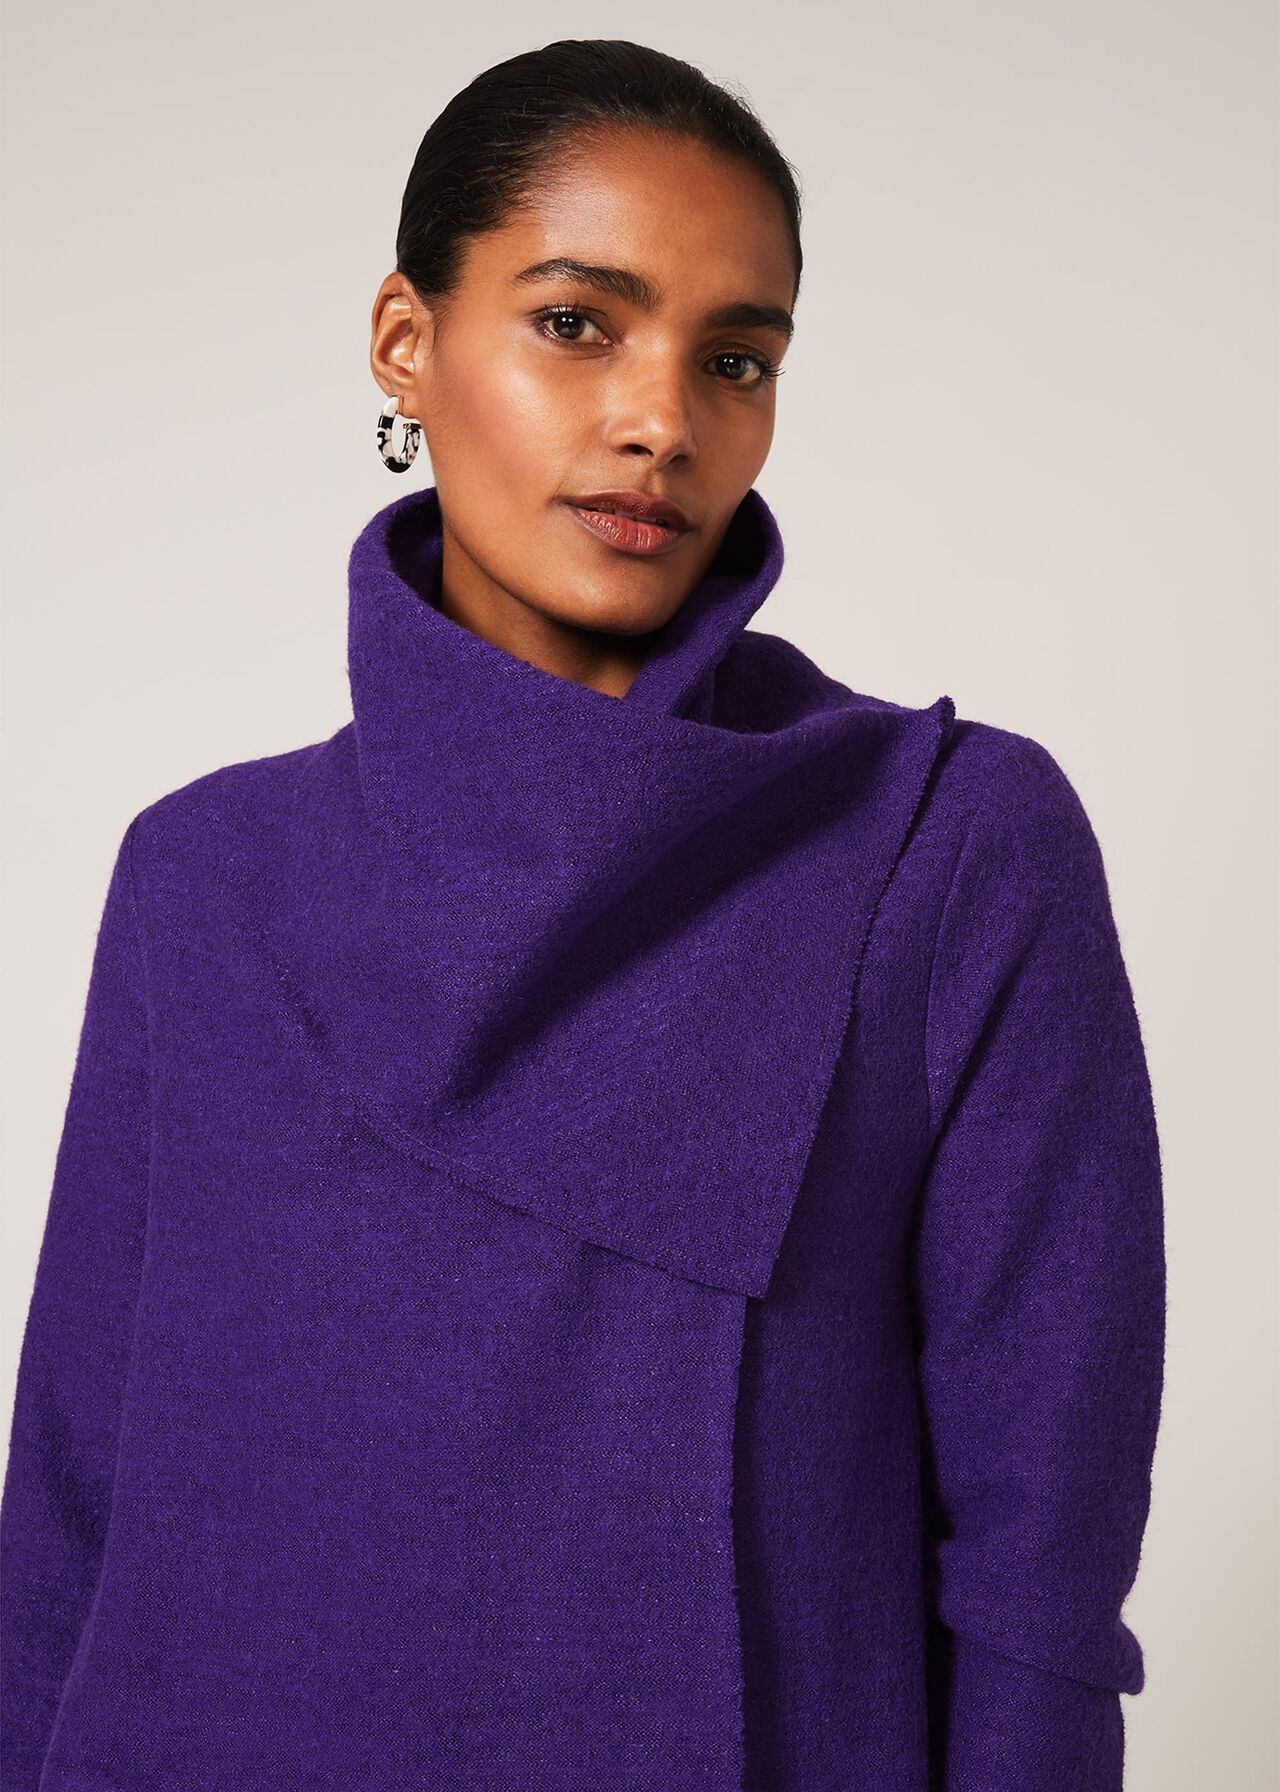 Bellona Knit Coat | Phase Eight